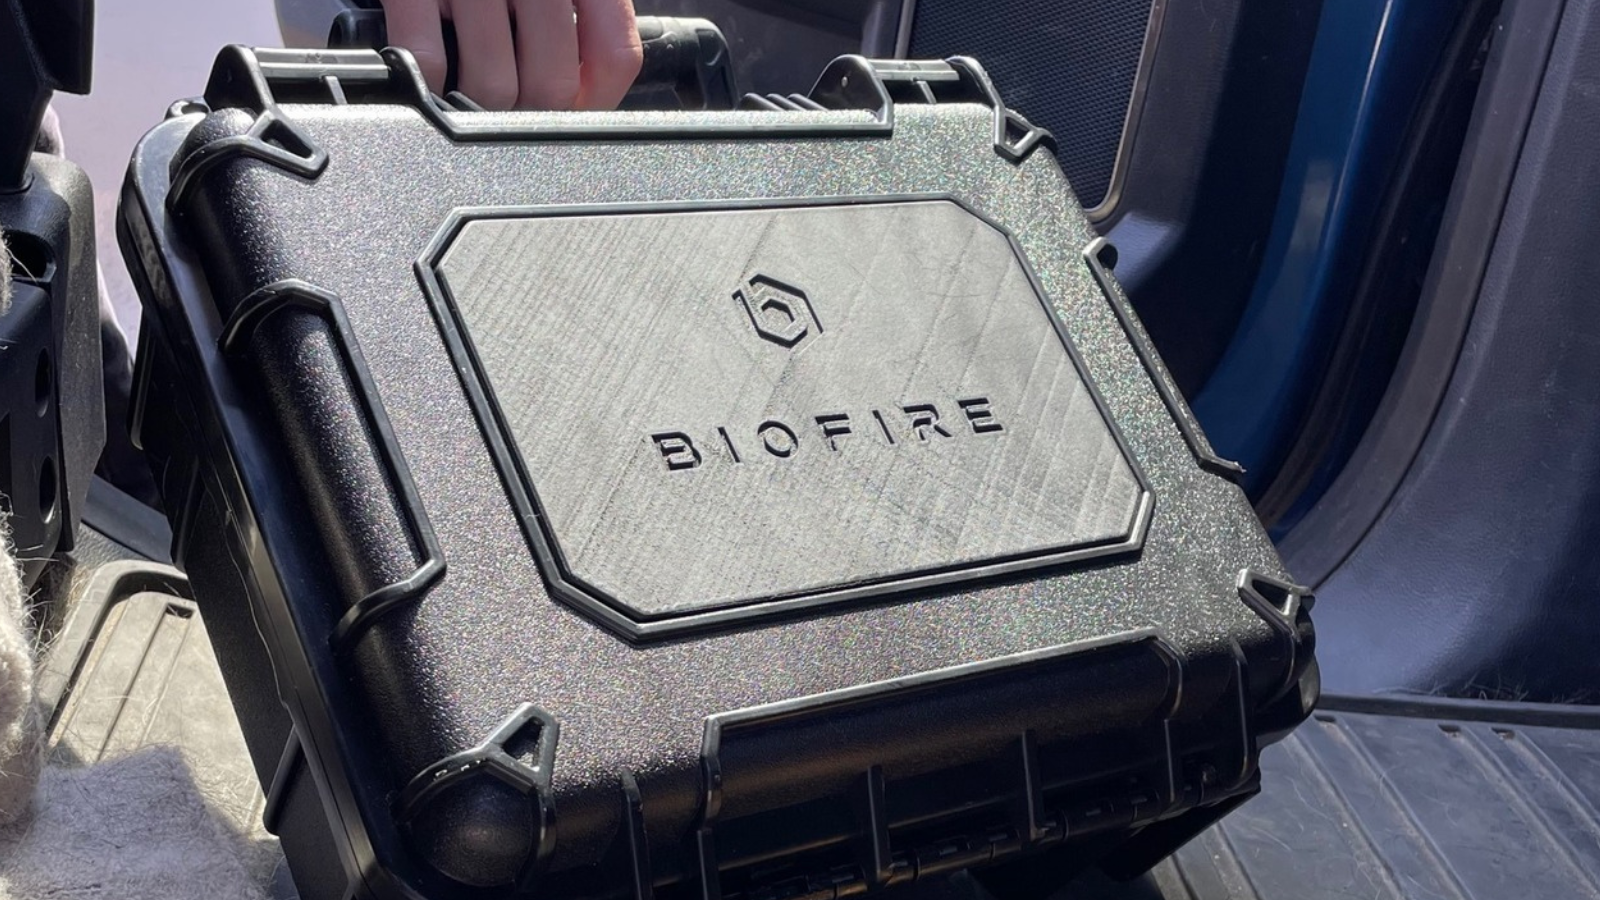 A person taking a Biofire gun case out of a car. 